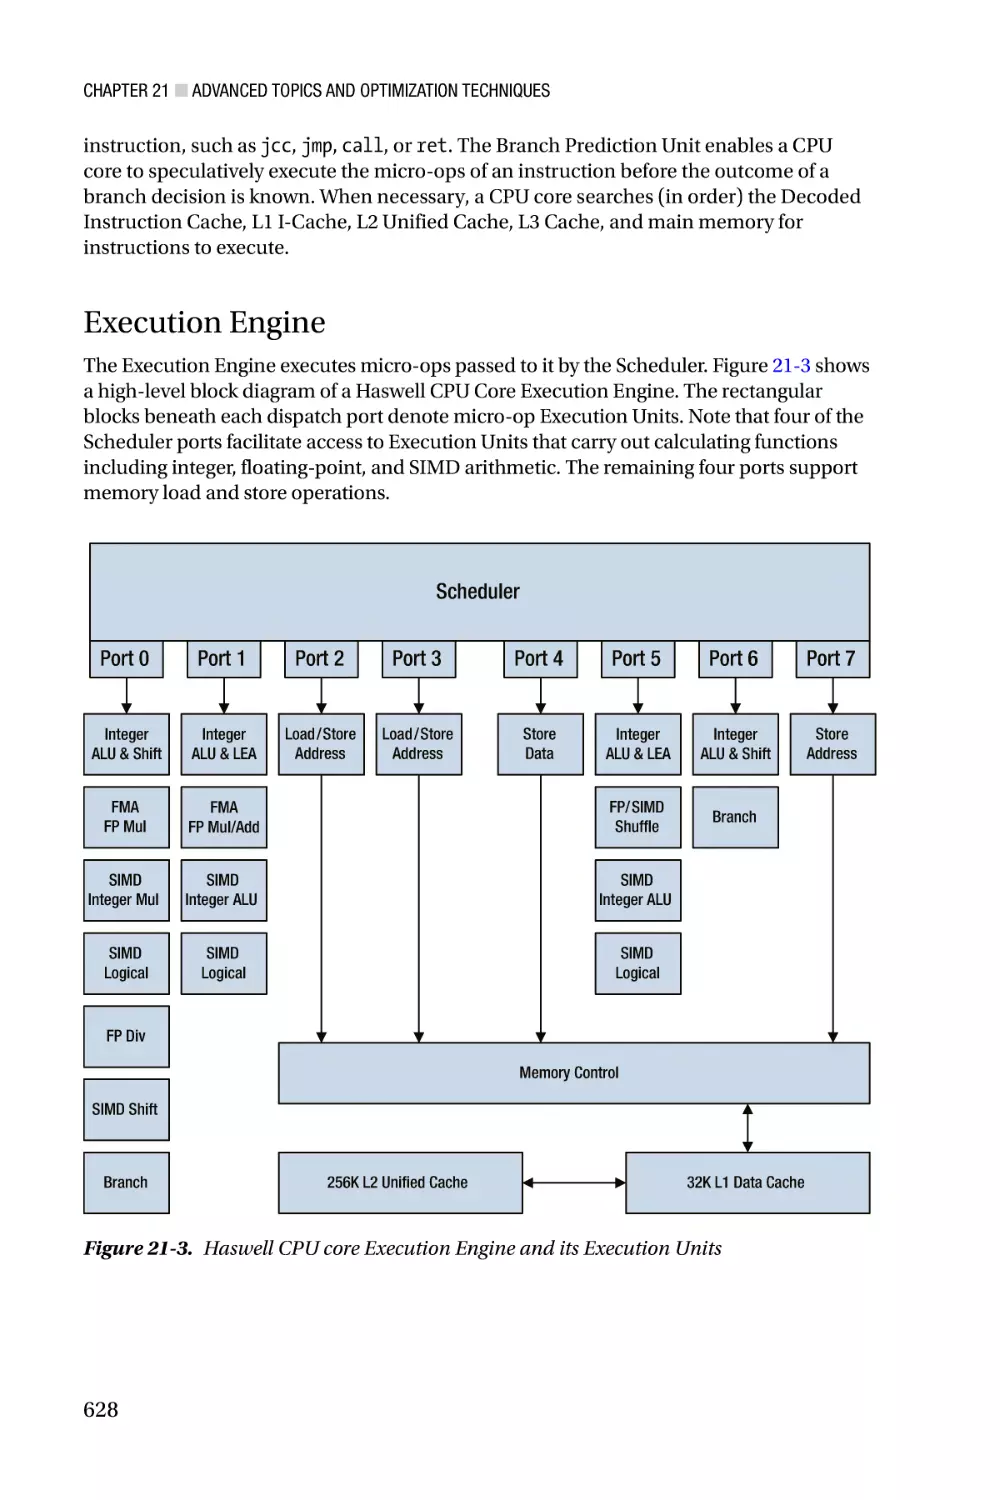 Execution Engine